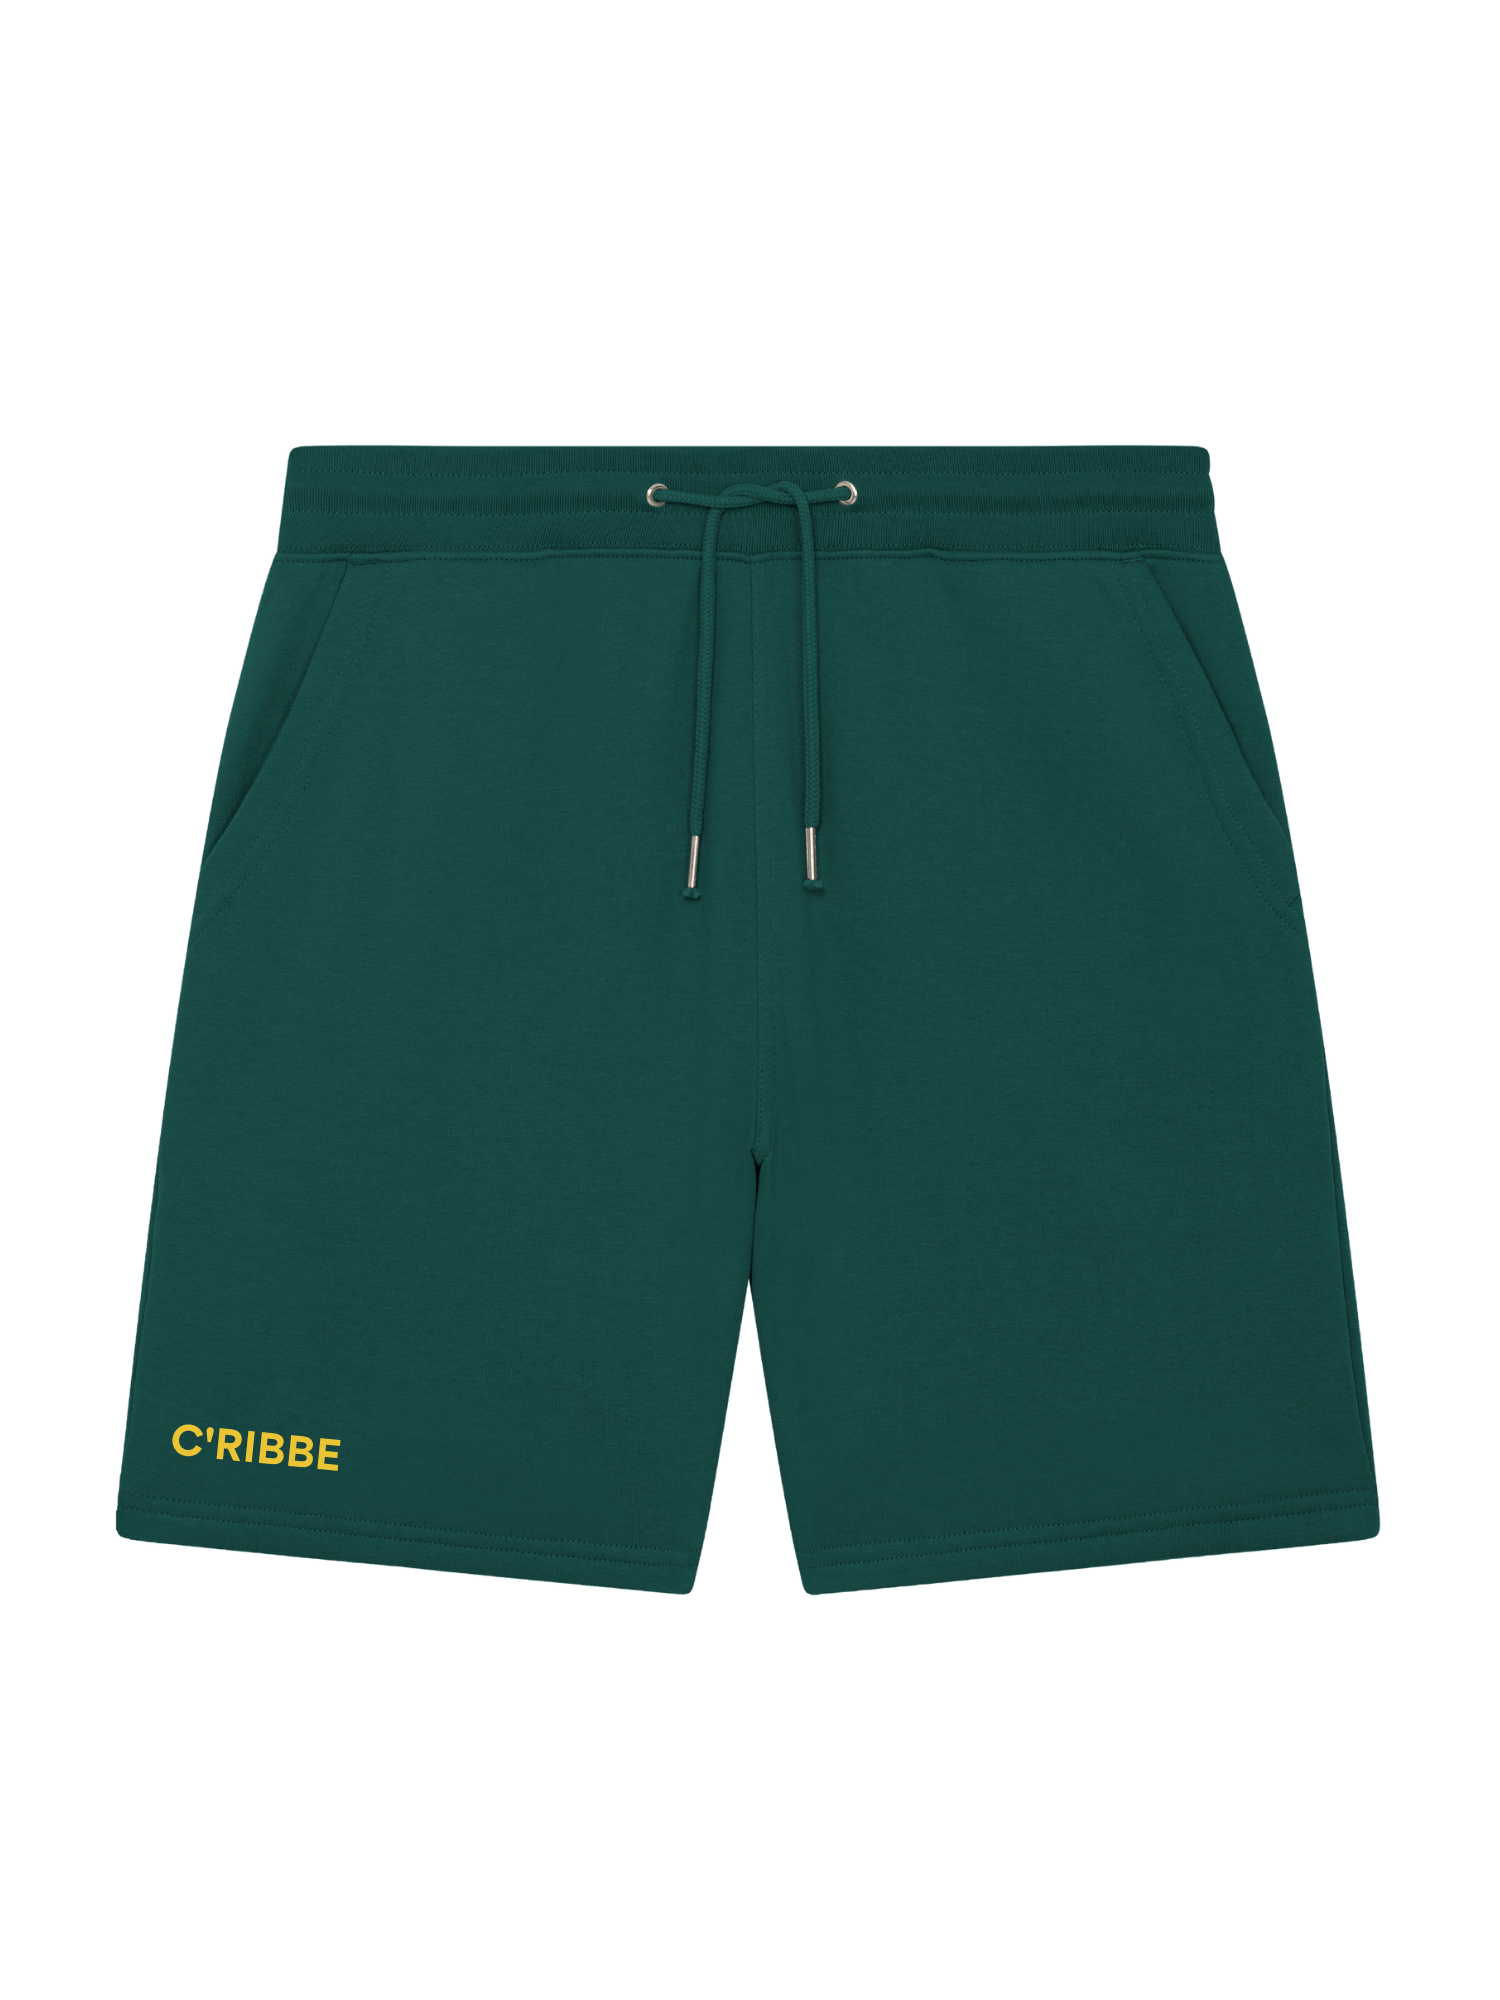 C'RIBBE Print Shorts Glazed Green